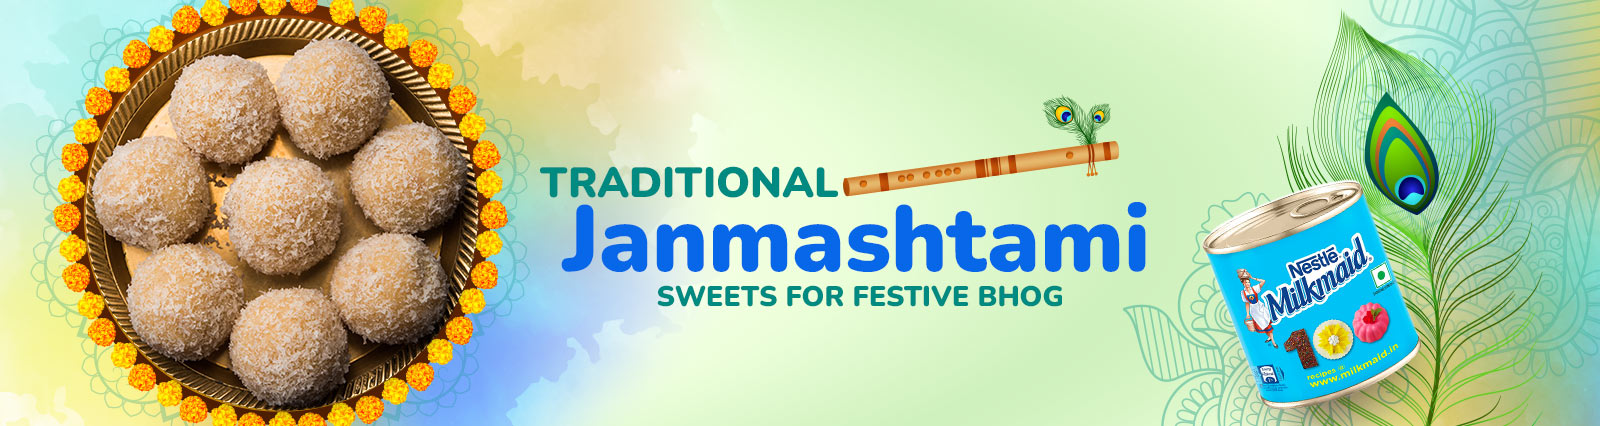 Celebrate This Janmashtami with These Delicious Sweet Recipes